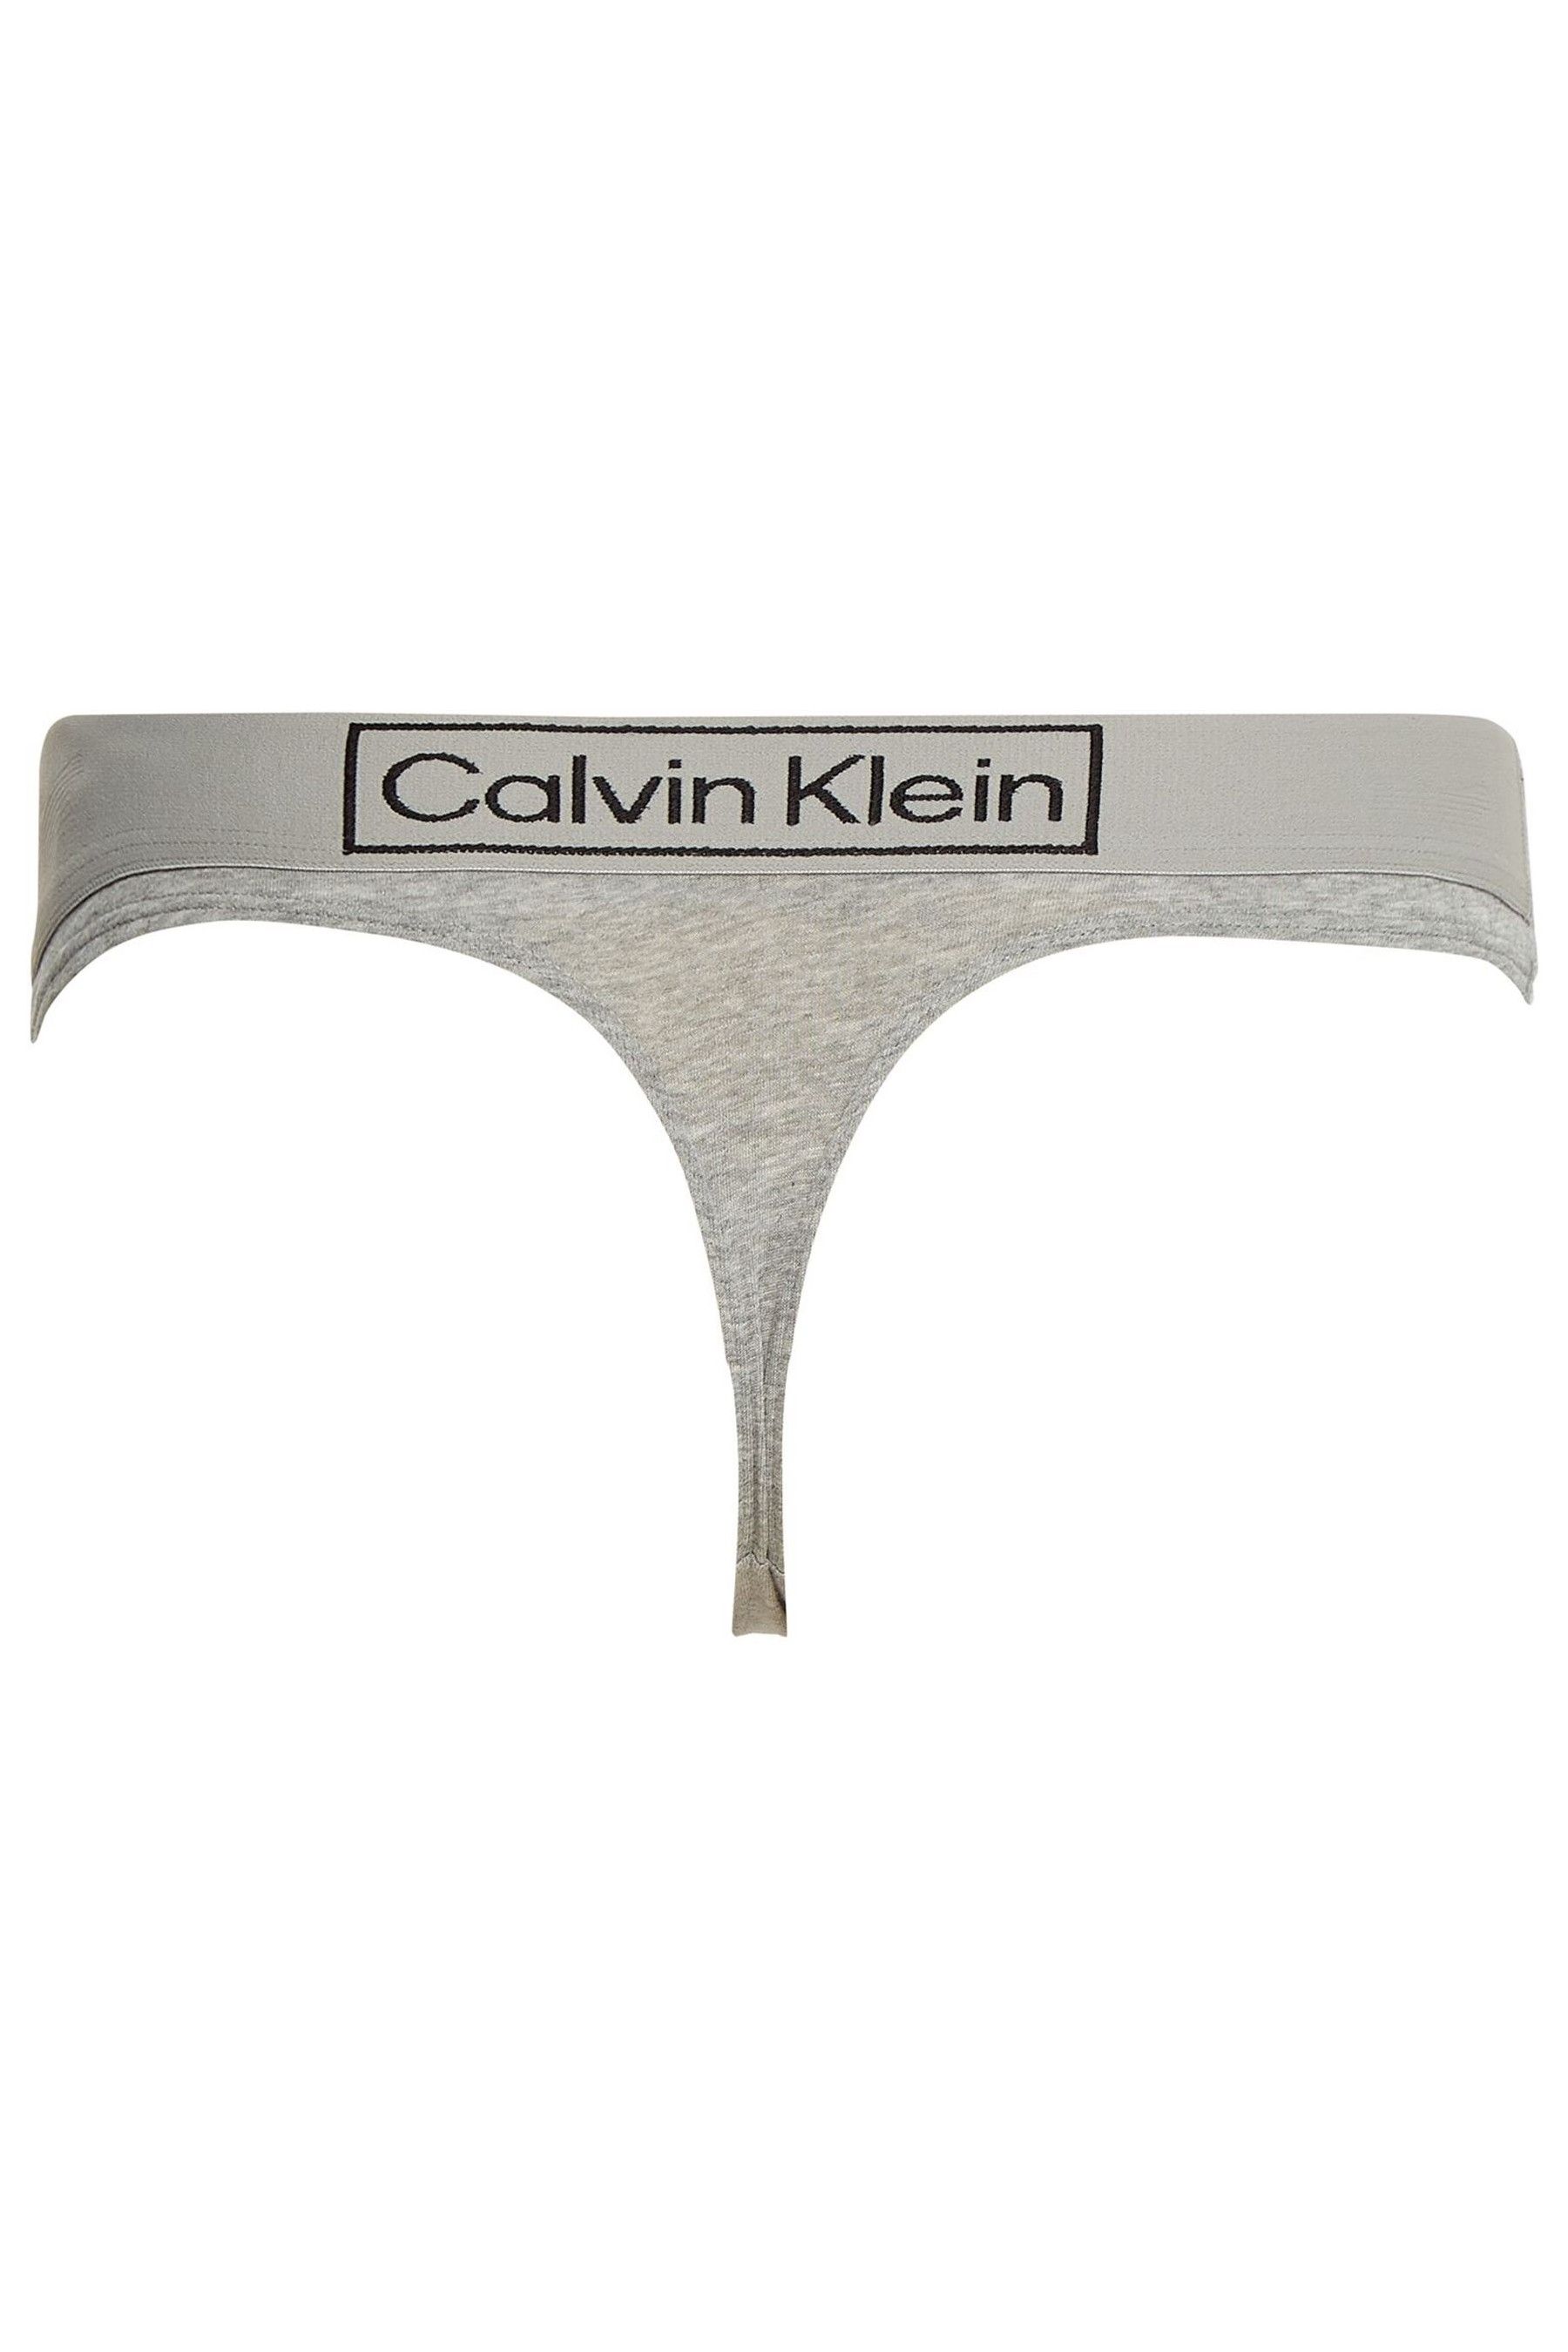 Calvin Klein Grey Reimagined Heritage Thong